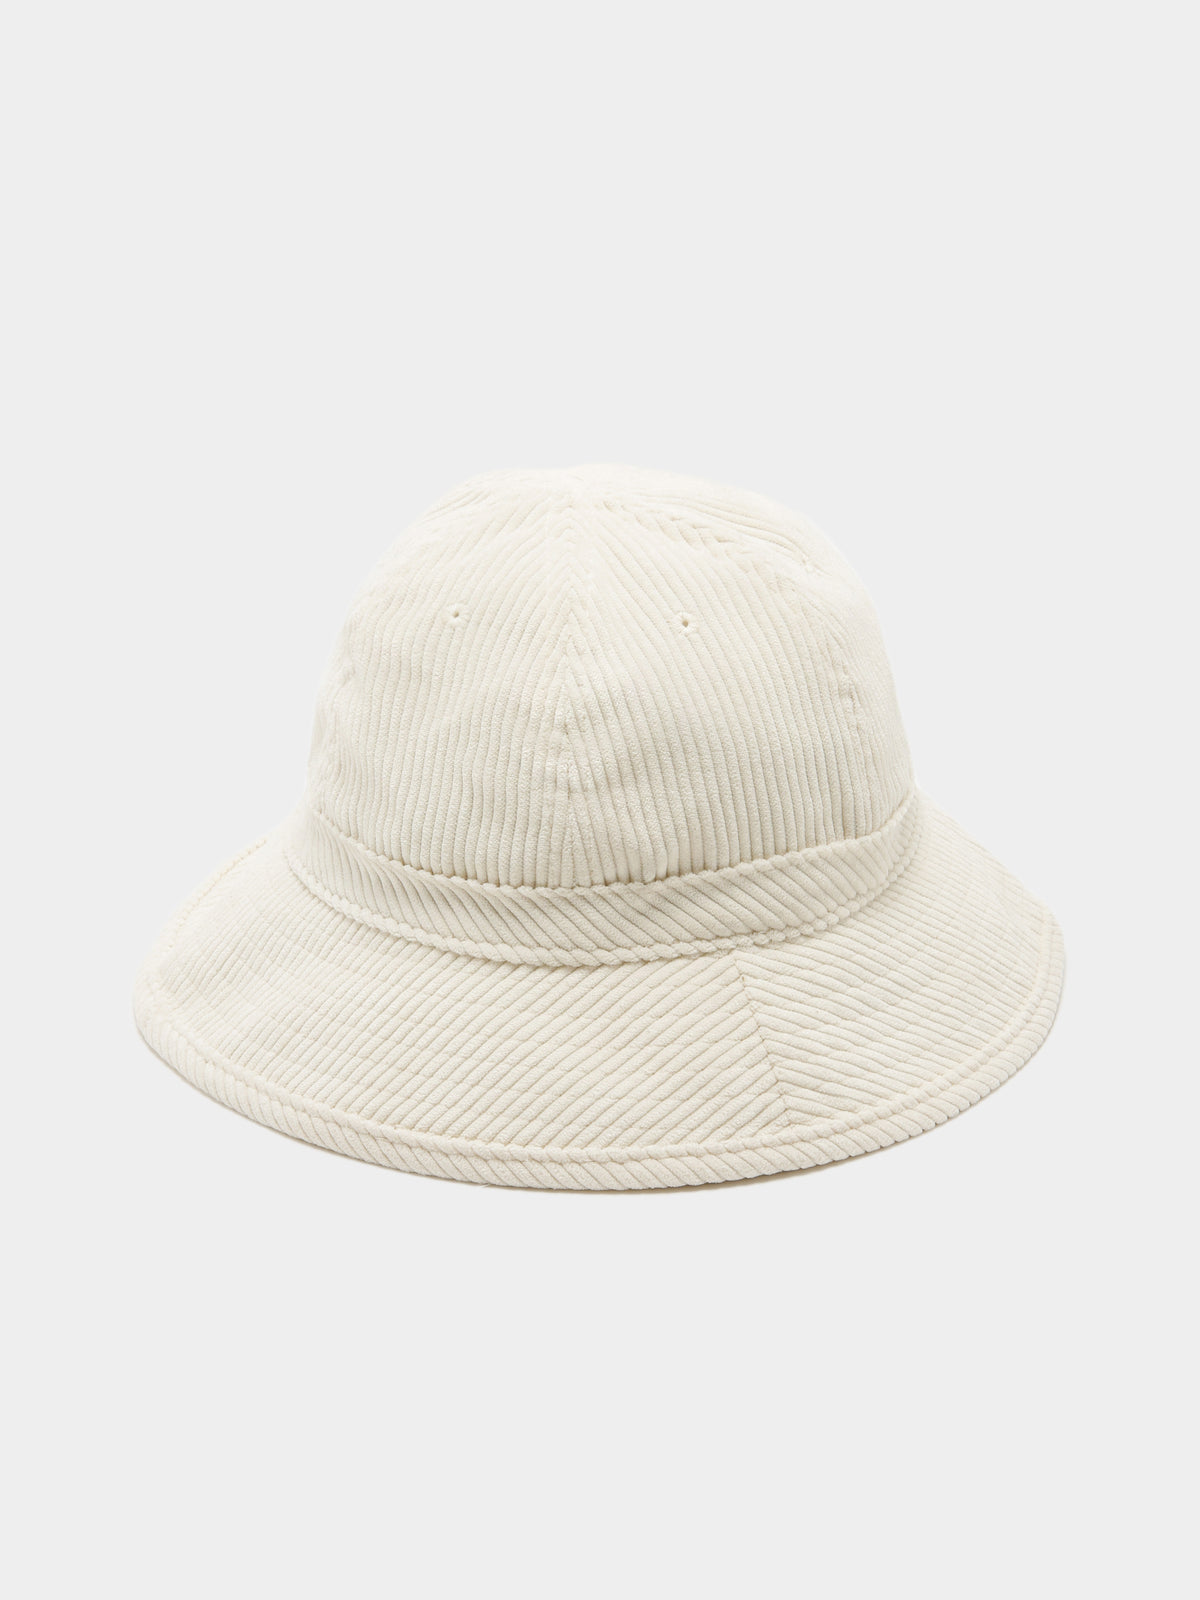 Adicolor Contempo Bucket Hat in Wonder White